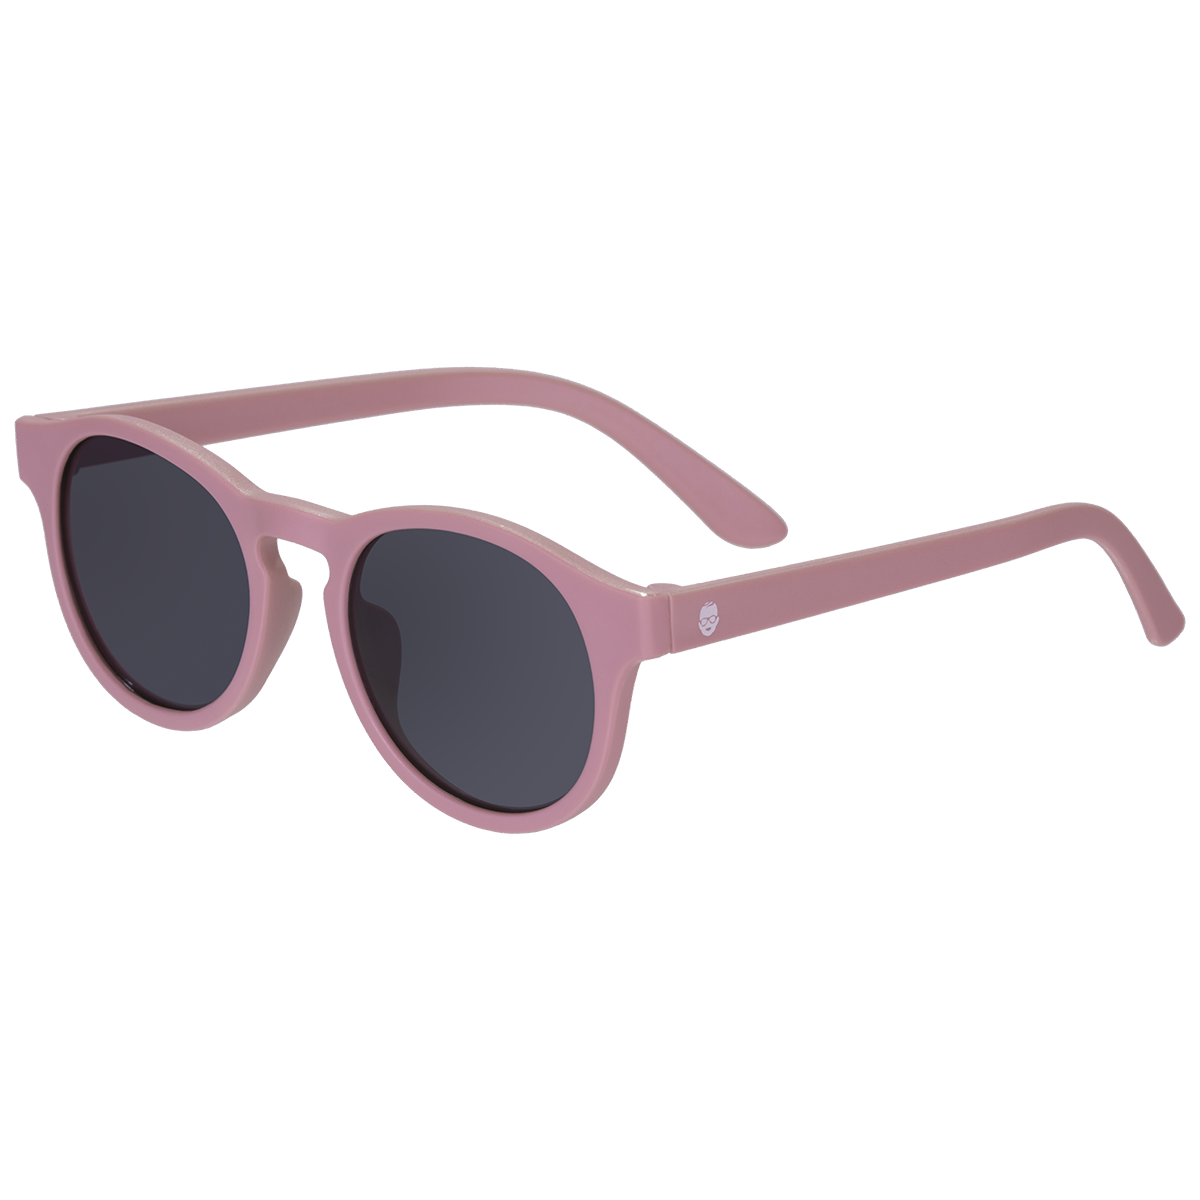 Babiators Original Keyholder: Pretty in Pink Kids Sunglasses Babiators   